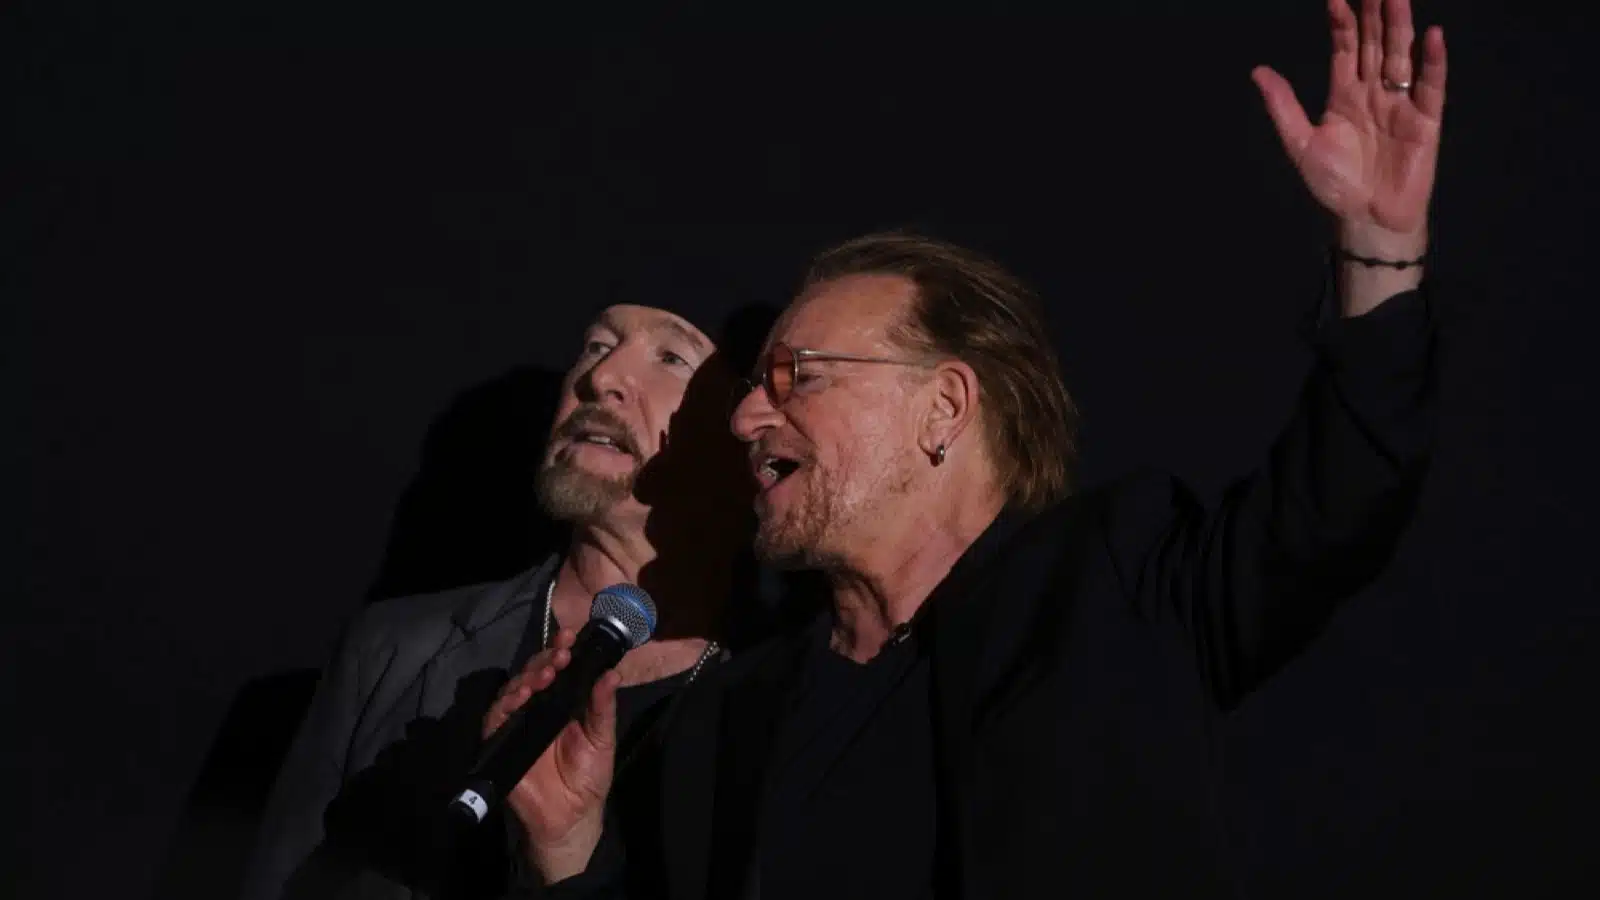 The U2 stars Bono and The Edge